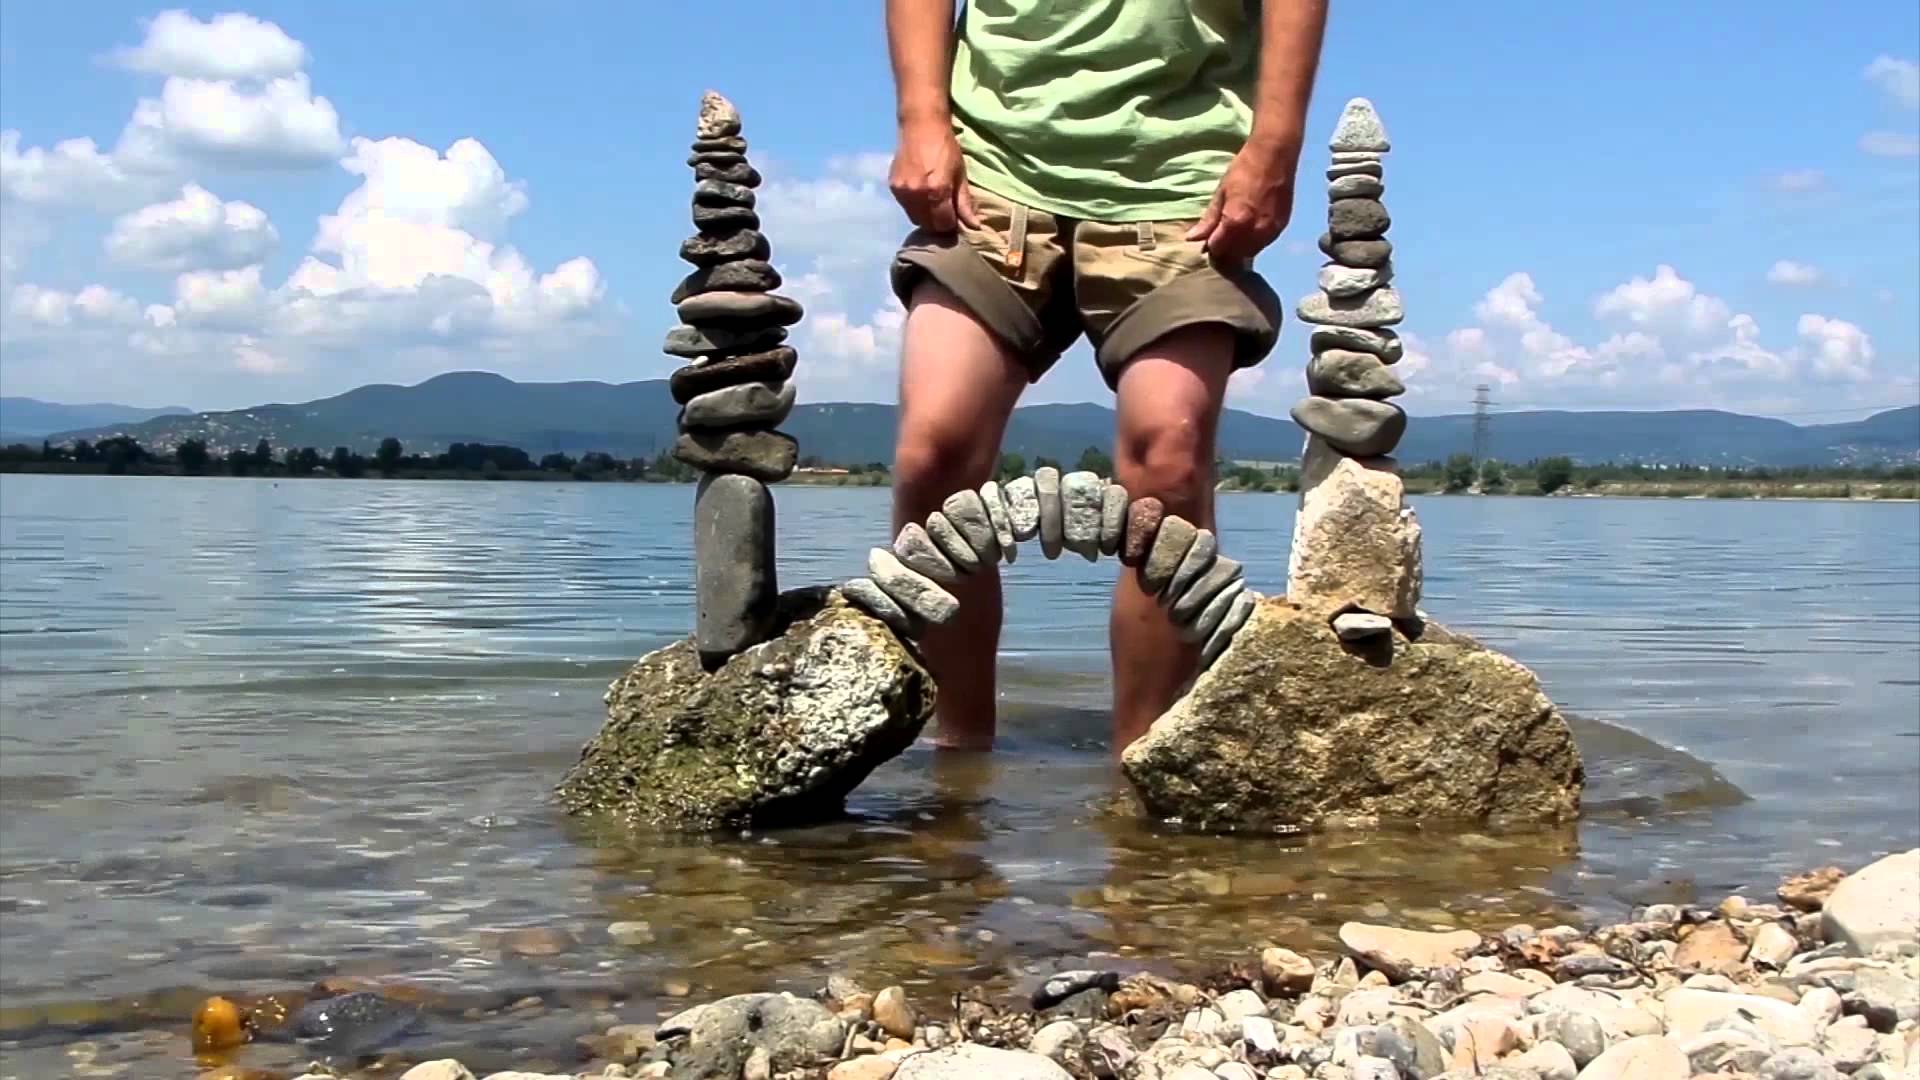 Stone balance art in Hungary by Tamas Kanya(Lupa-tó) - YouTube